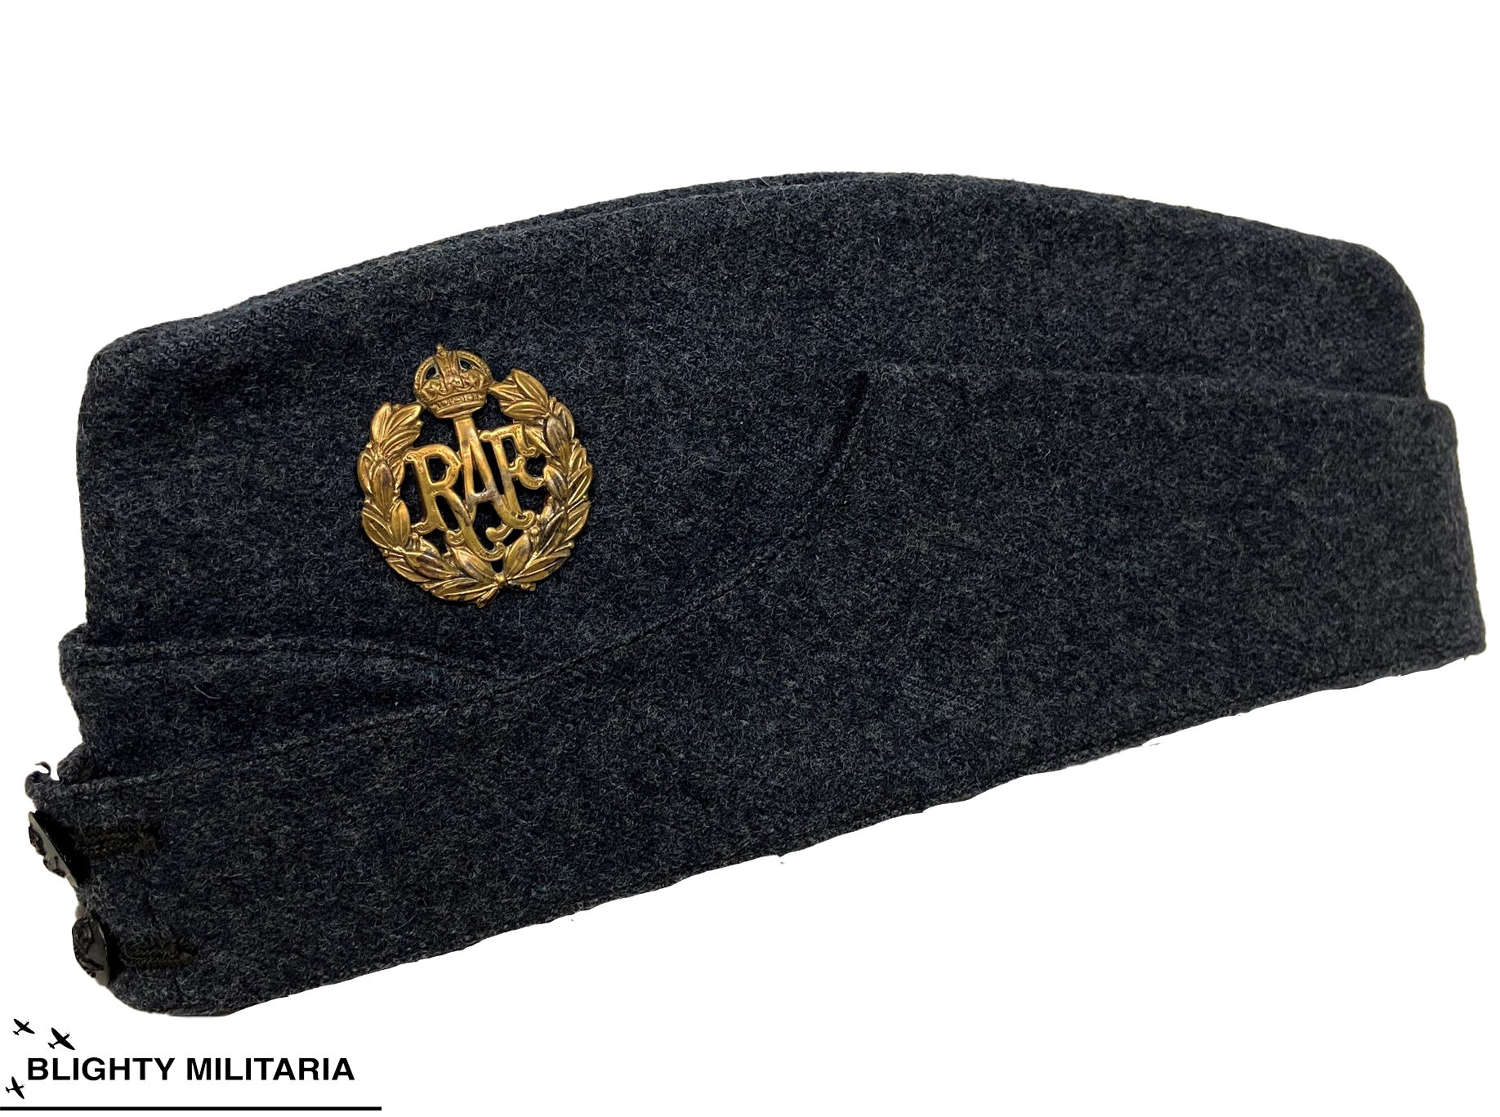 Original 1944 Dated RAF Ordinary Airman's Forage Cap - Size 7 1/4